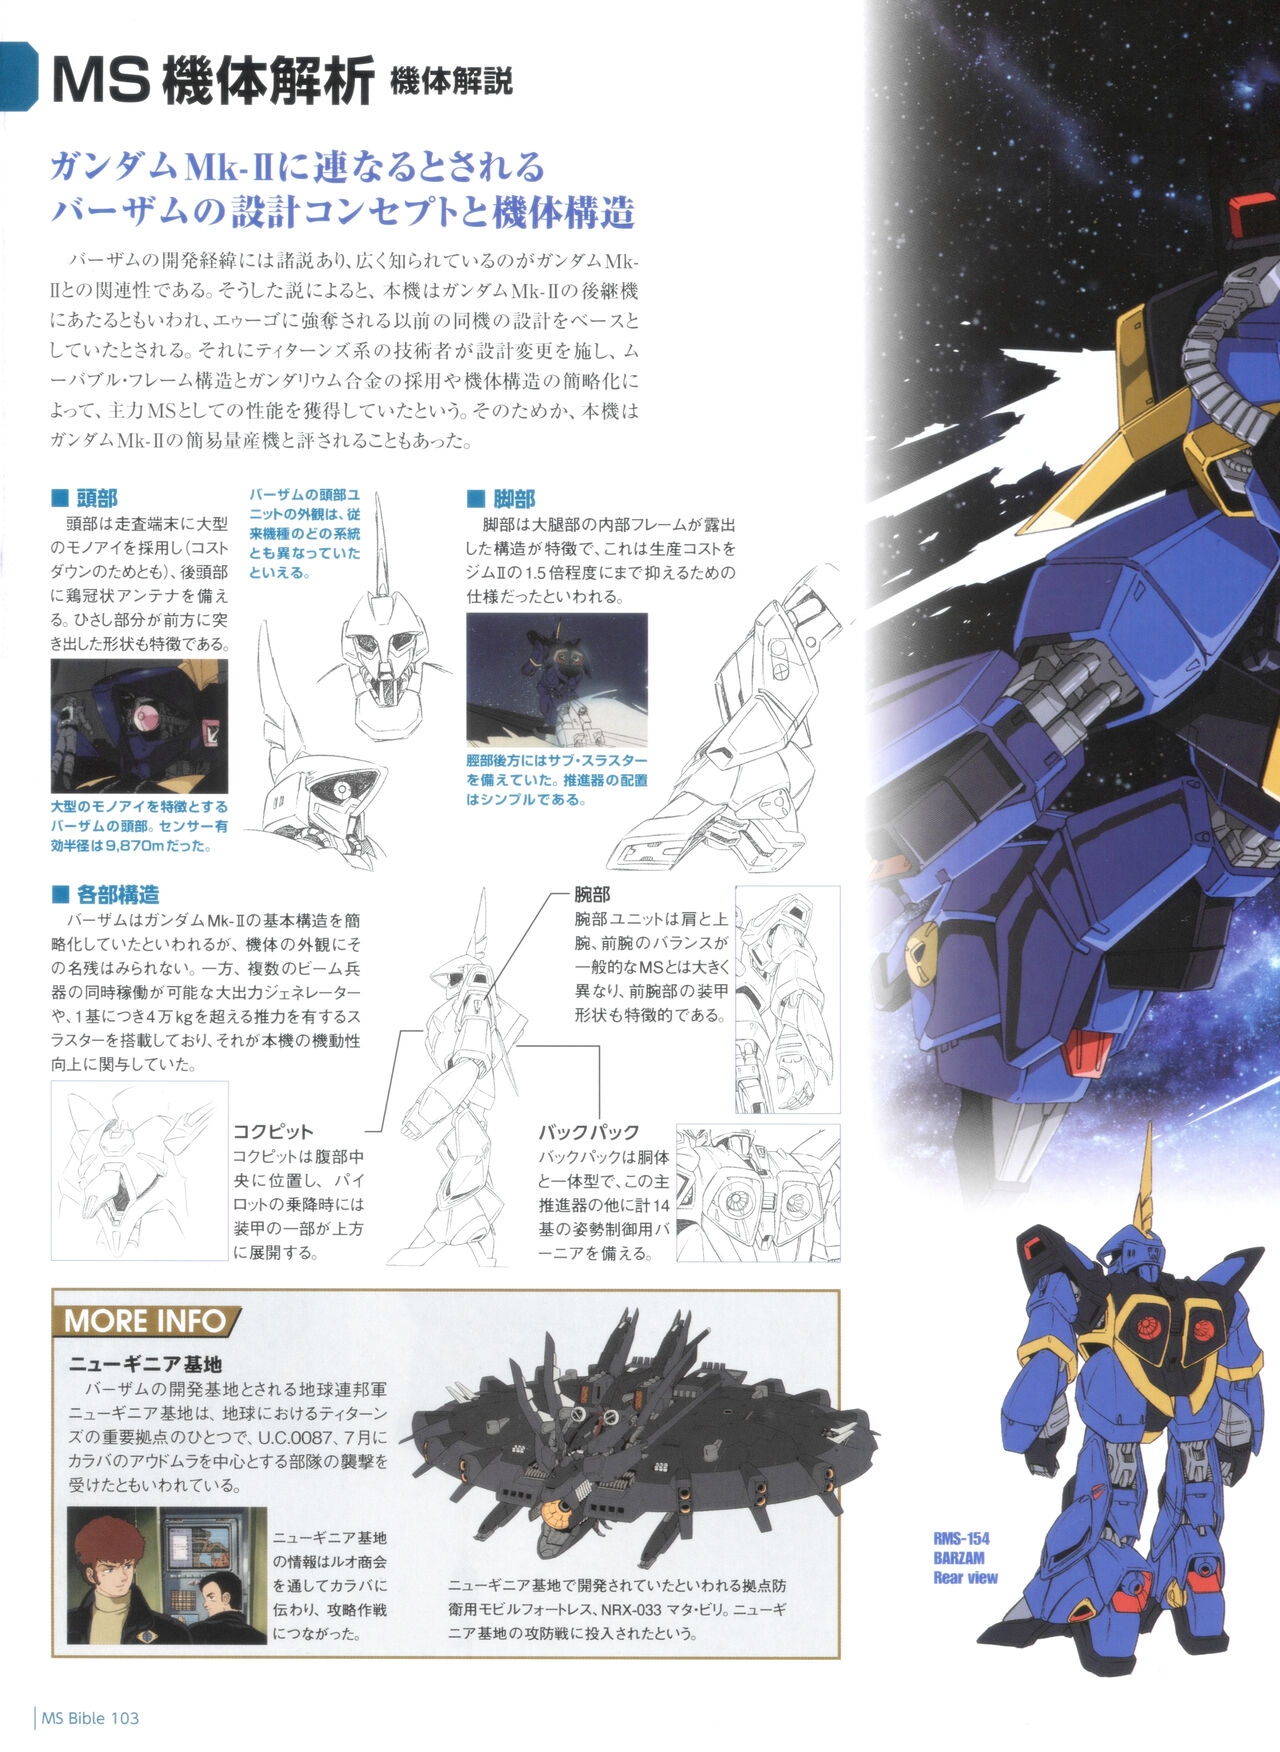 Gundam Mobile Suit Bible 103 7